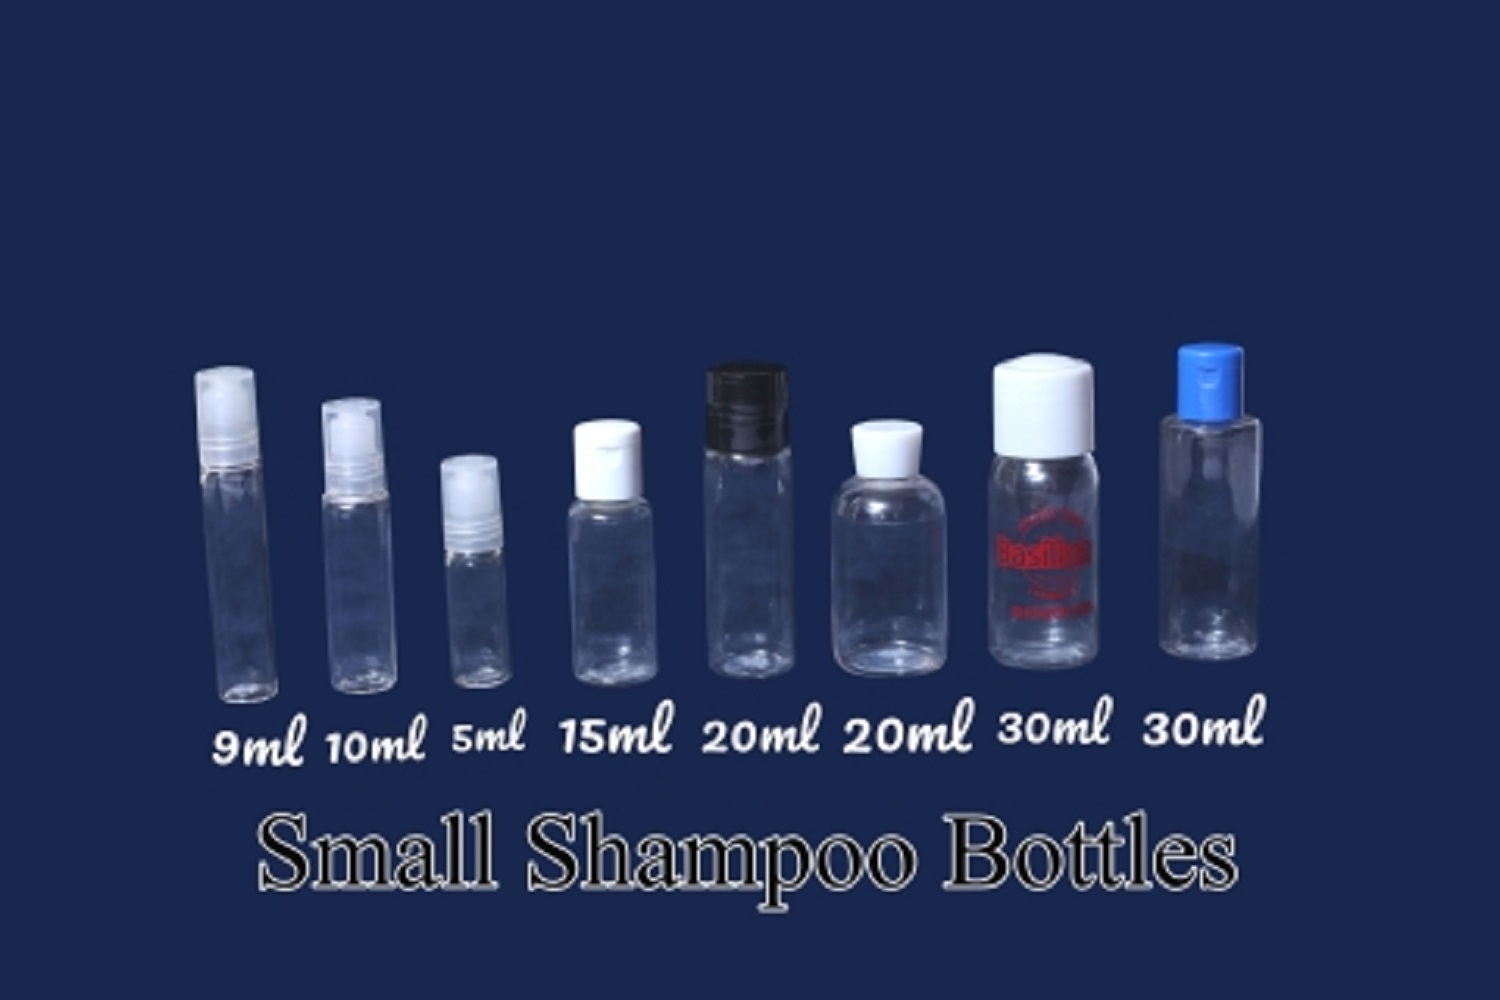 Small shampoo bottles